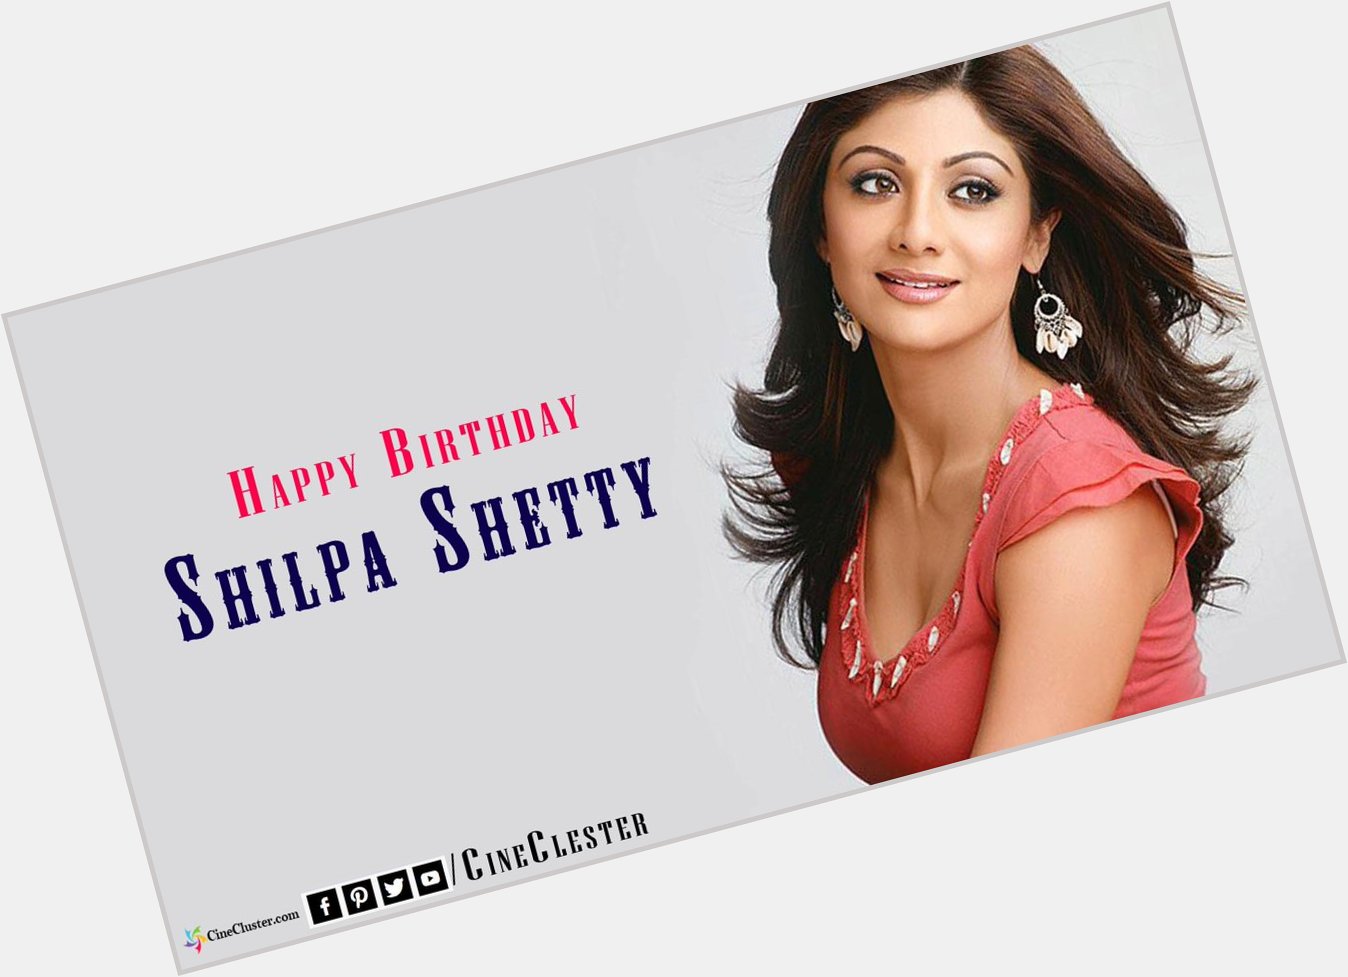  wishing a happy birthday to Actress Shilpa Shetty  